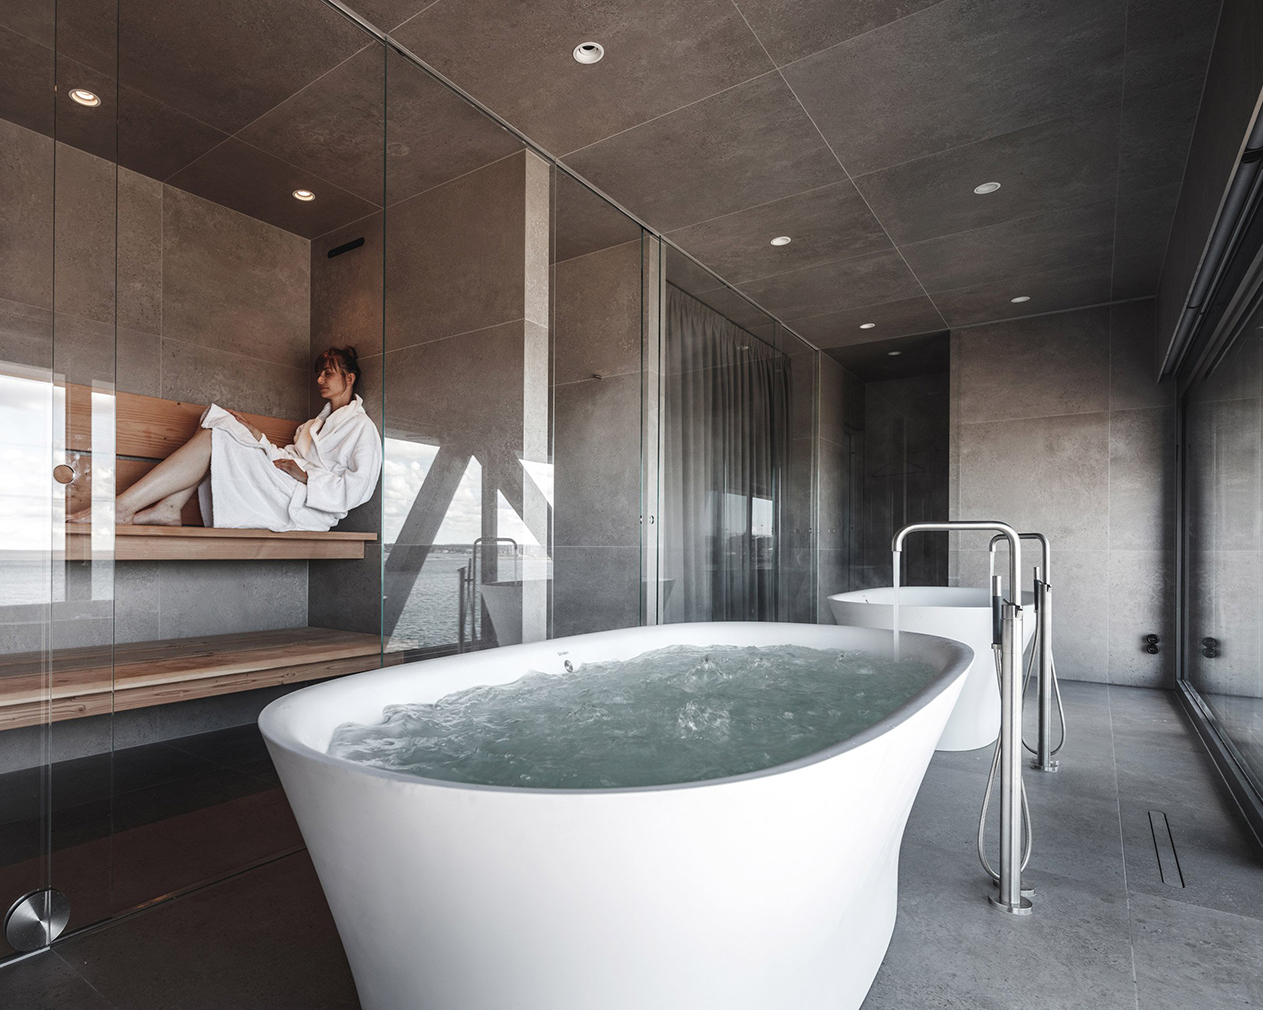 The Krane hotel and spa in Copenhagen